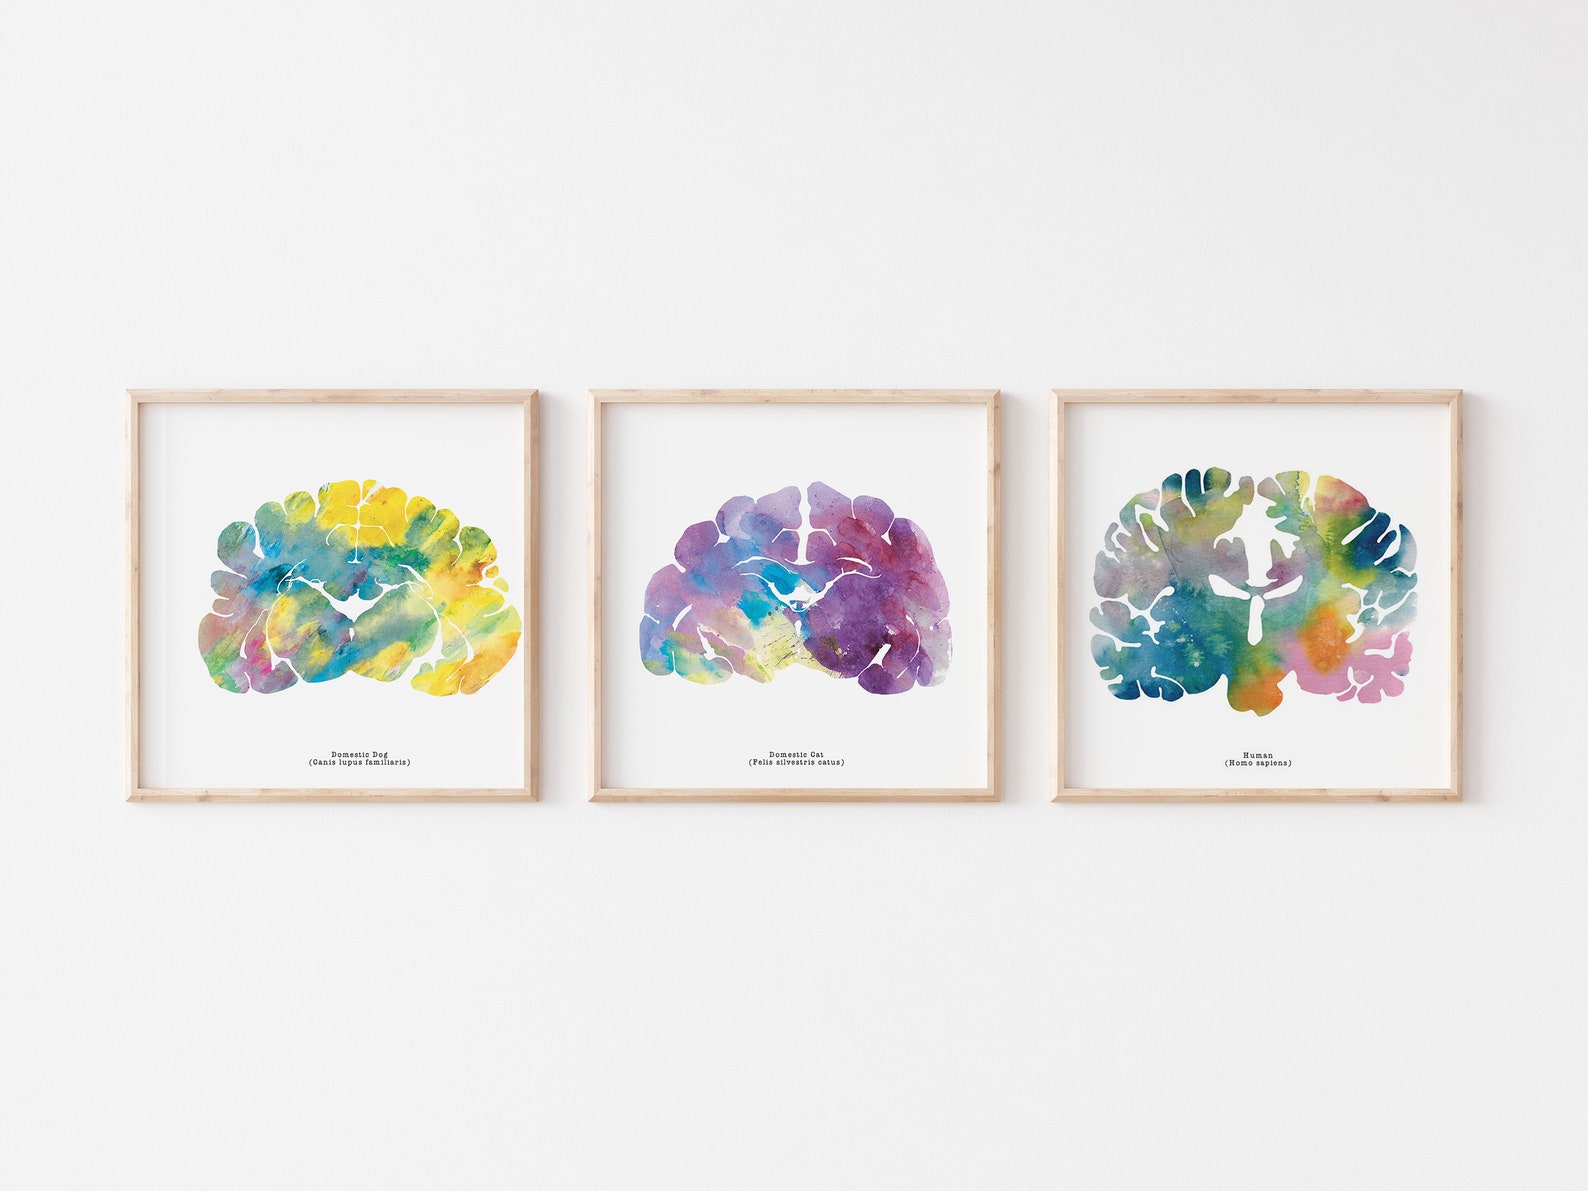 Veterinary Artwork - Human Cat Dog Brain Art - Three 12" x 12" Prints - Neuroscience, Neurology, Psychology Artwork - Great Gift for Grads